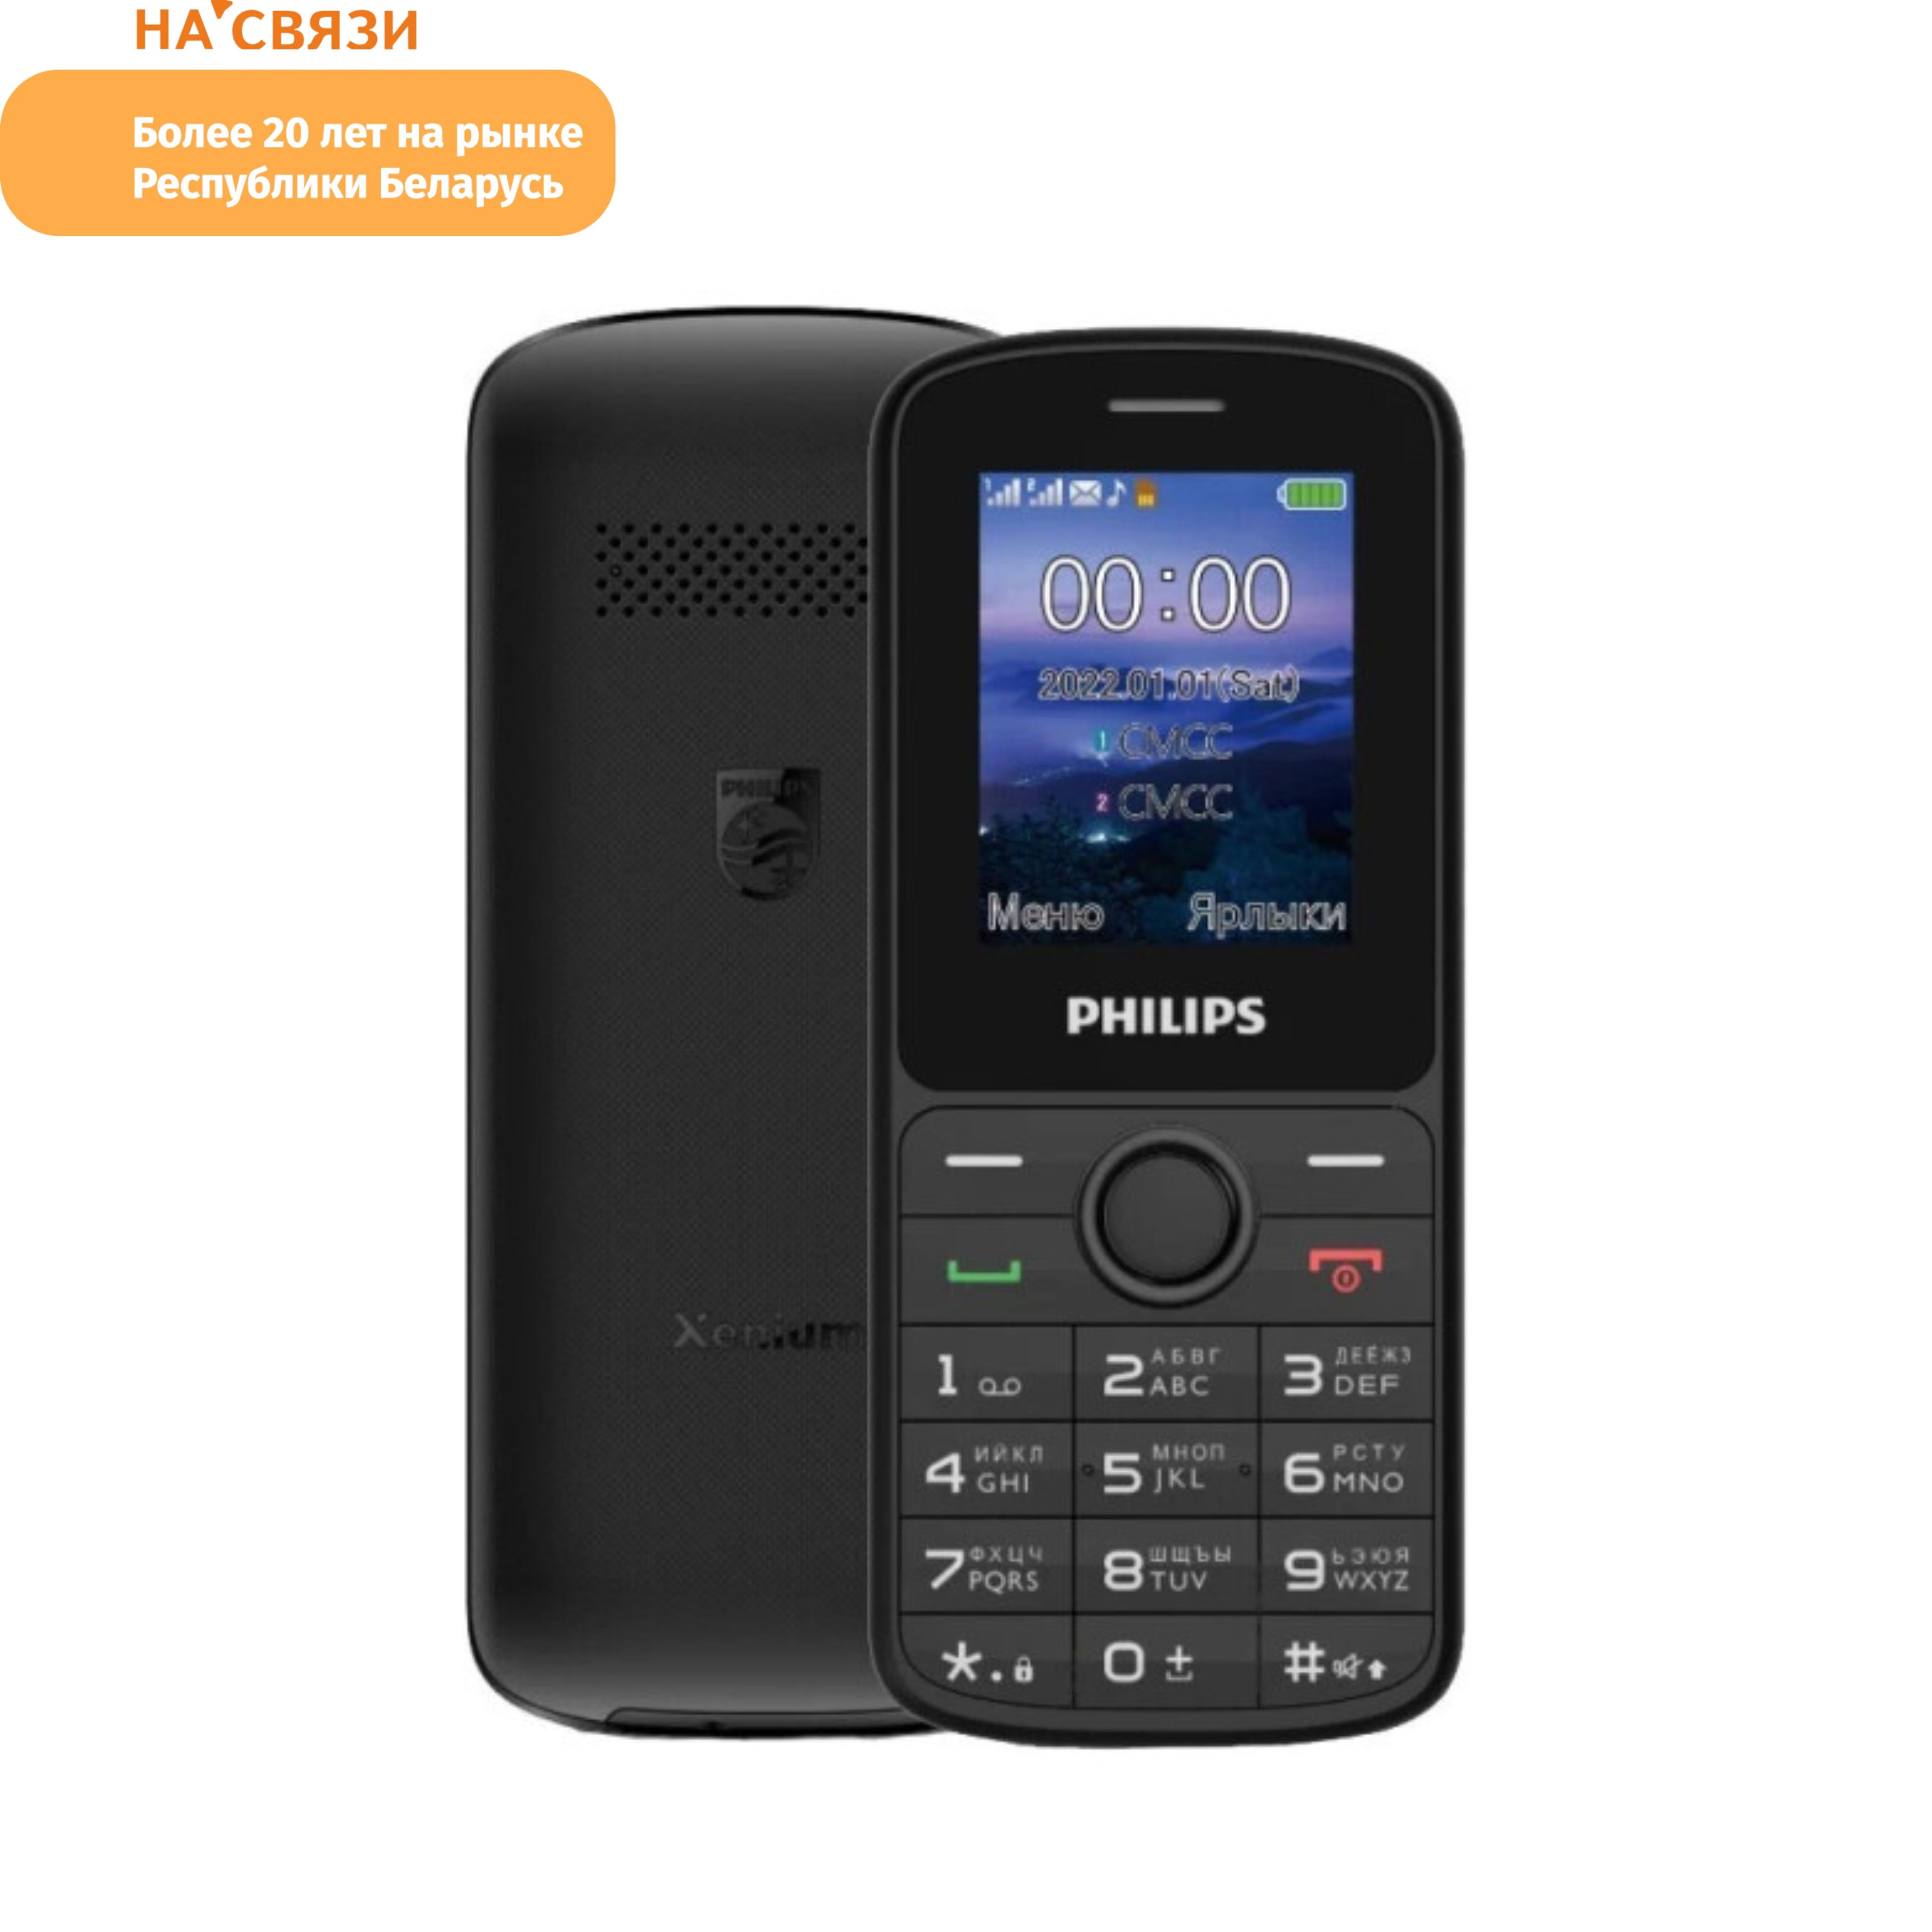 Philips Xenium e111. Philips Xenium e590. Philips Xenium e2101. Philips Xenium e111 Black. Телефон xenium e580